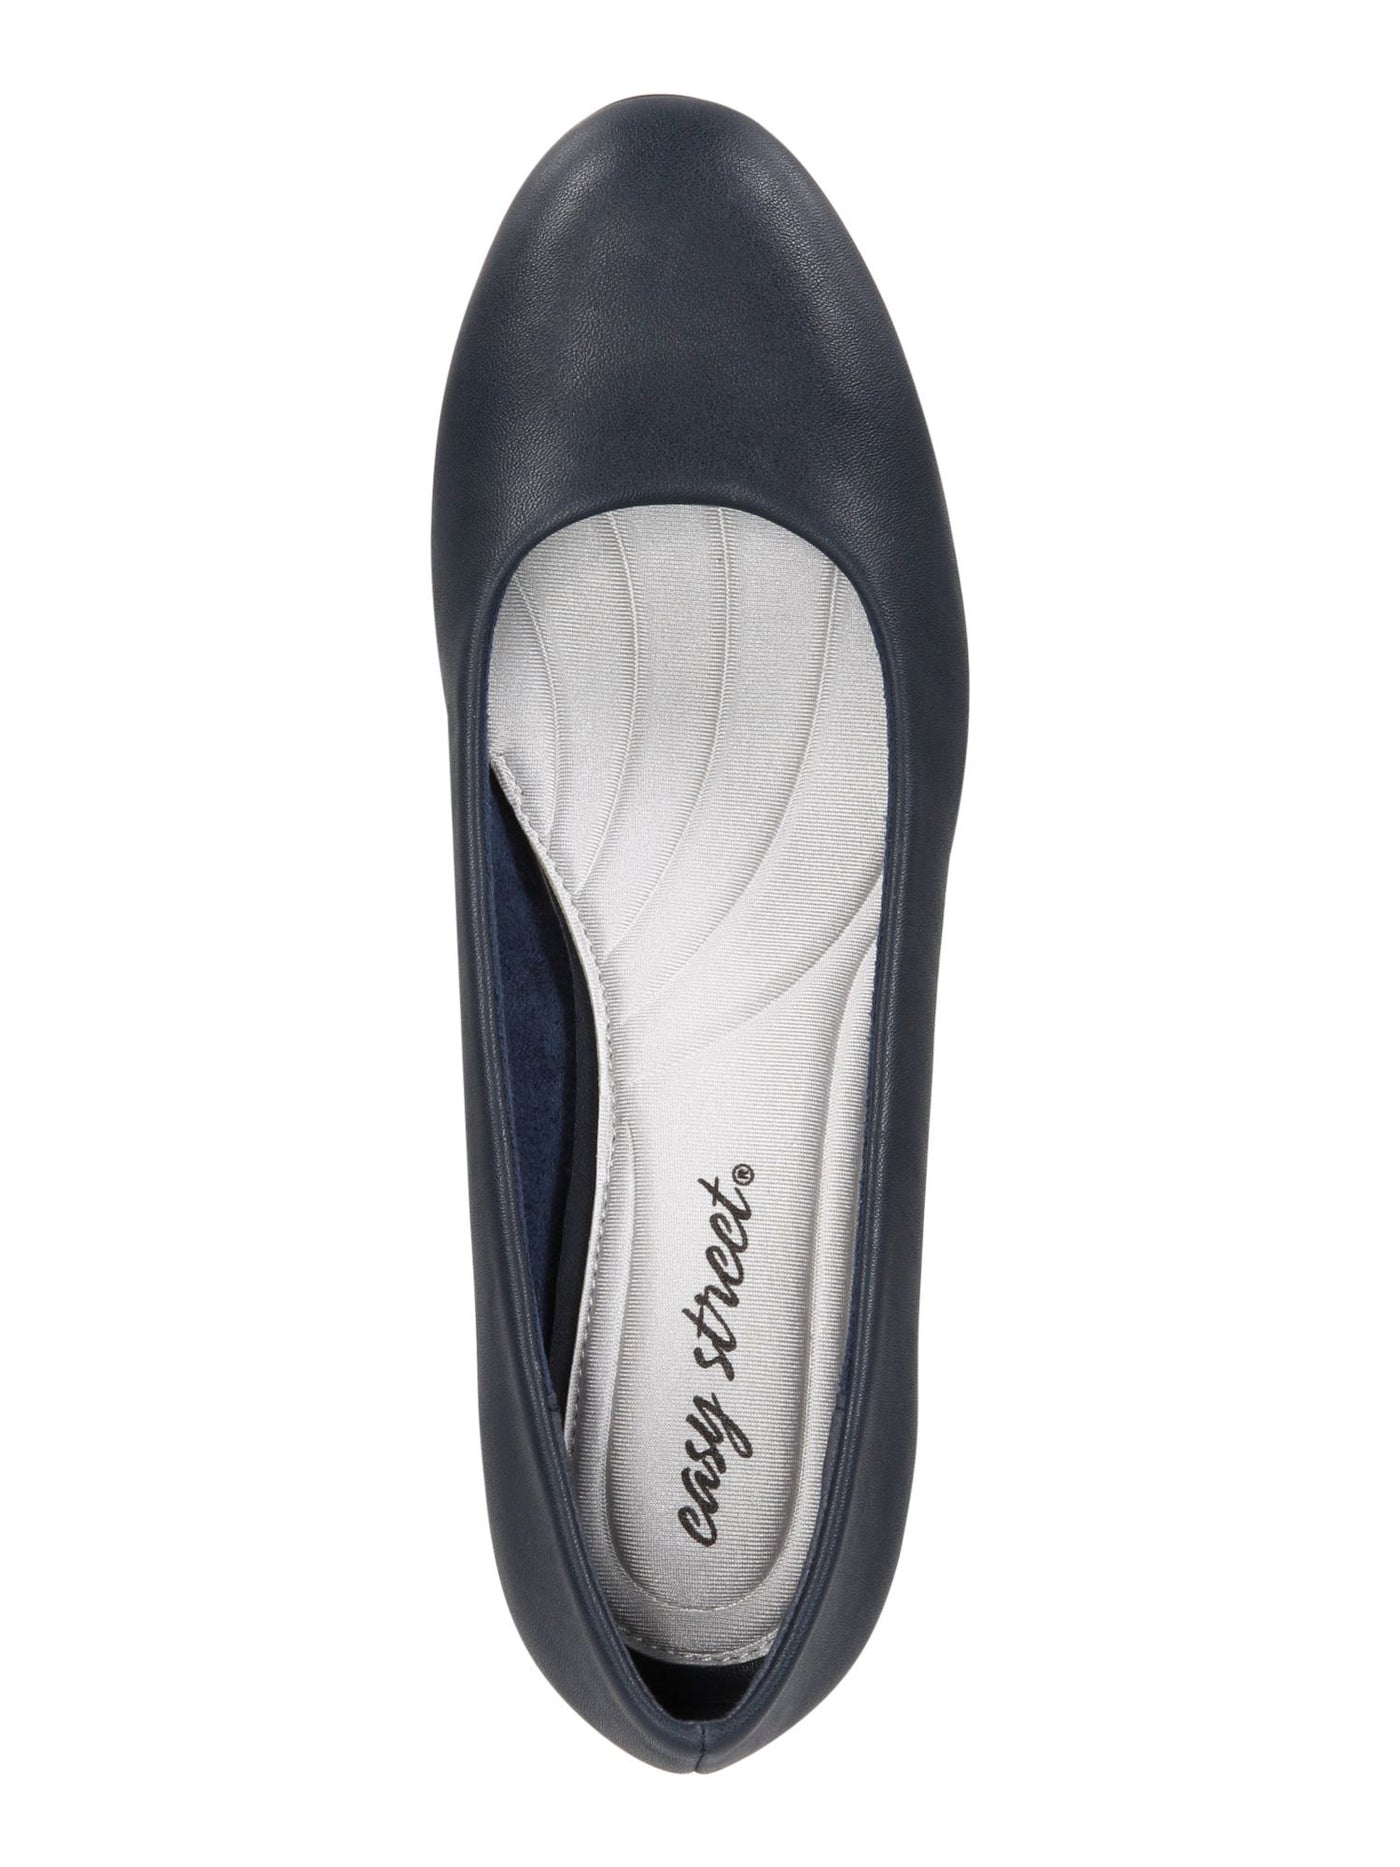 EASY STREET Womens Navy Cushioned Proper Round Toe Block Heel Slip On Pumps Shoes 7.5 WW